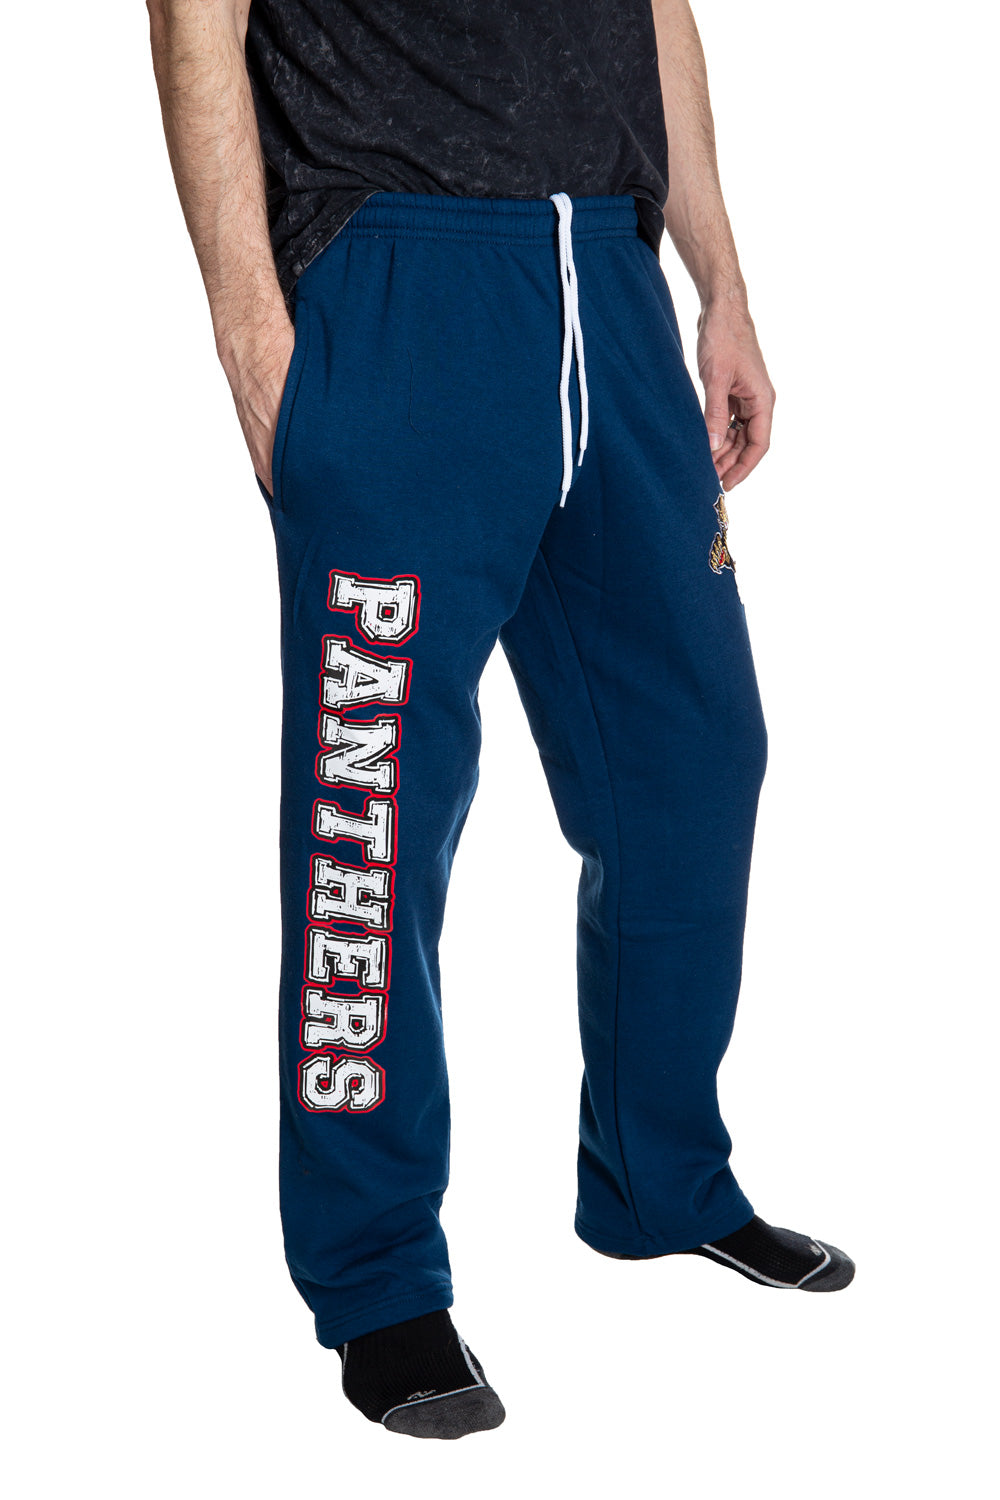 Florida Panthers Premium Fleece Sweatpants Side View Of Panthers Print.